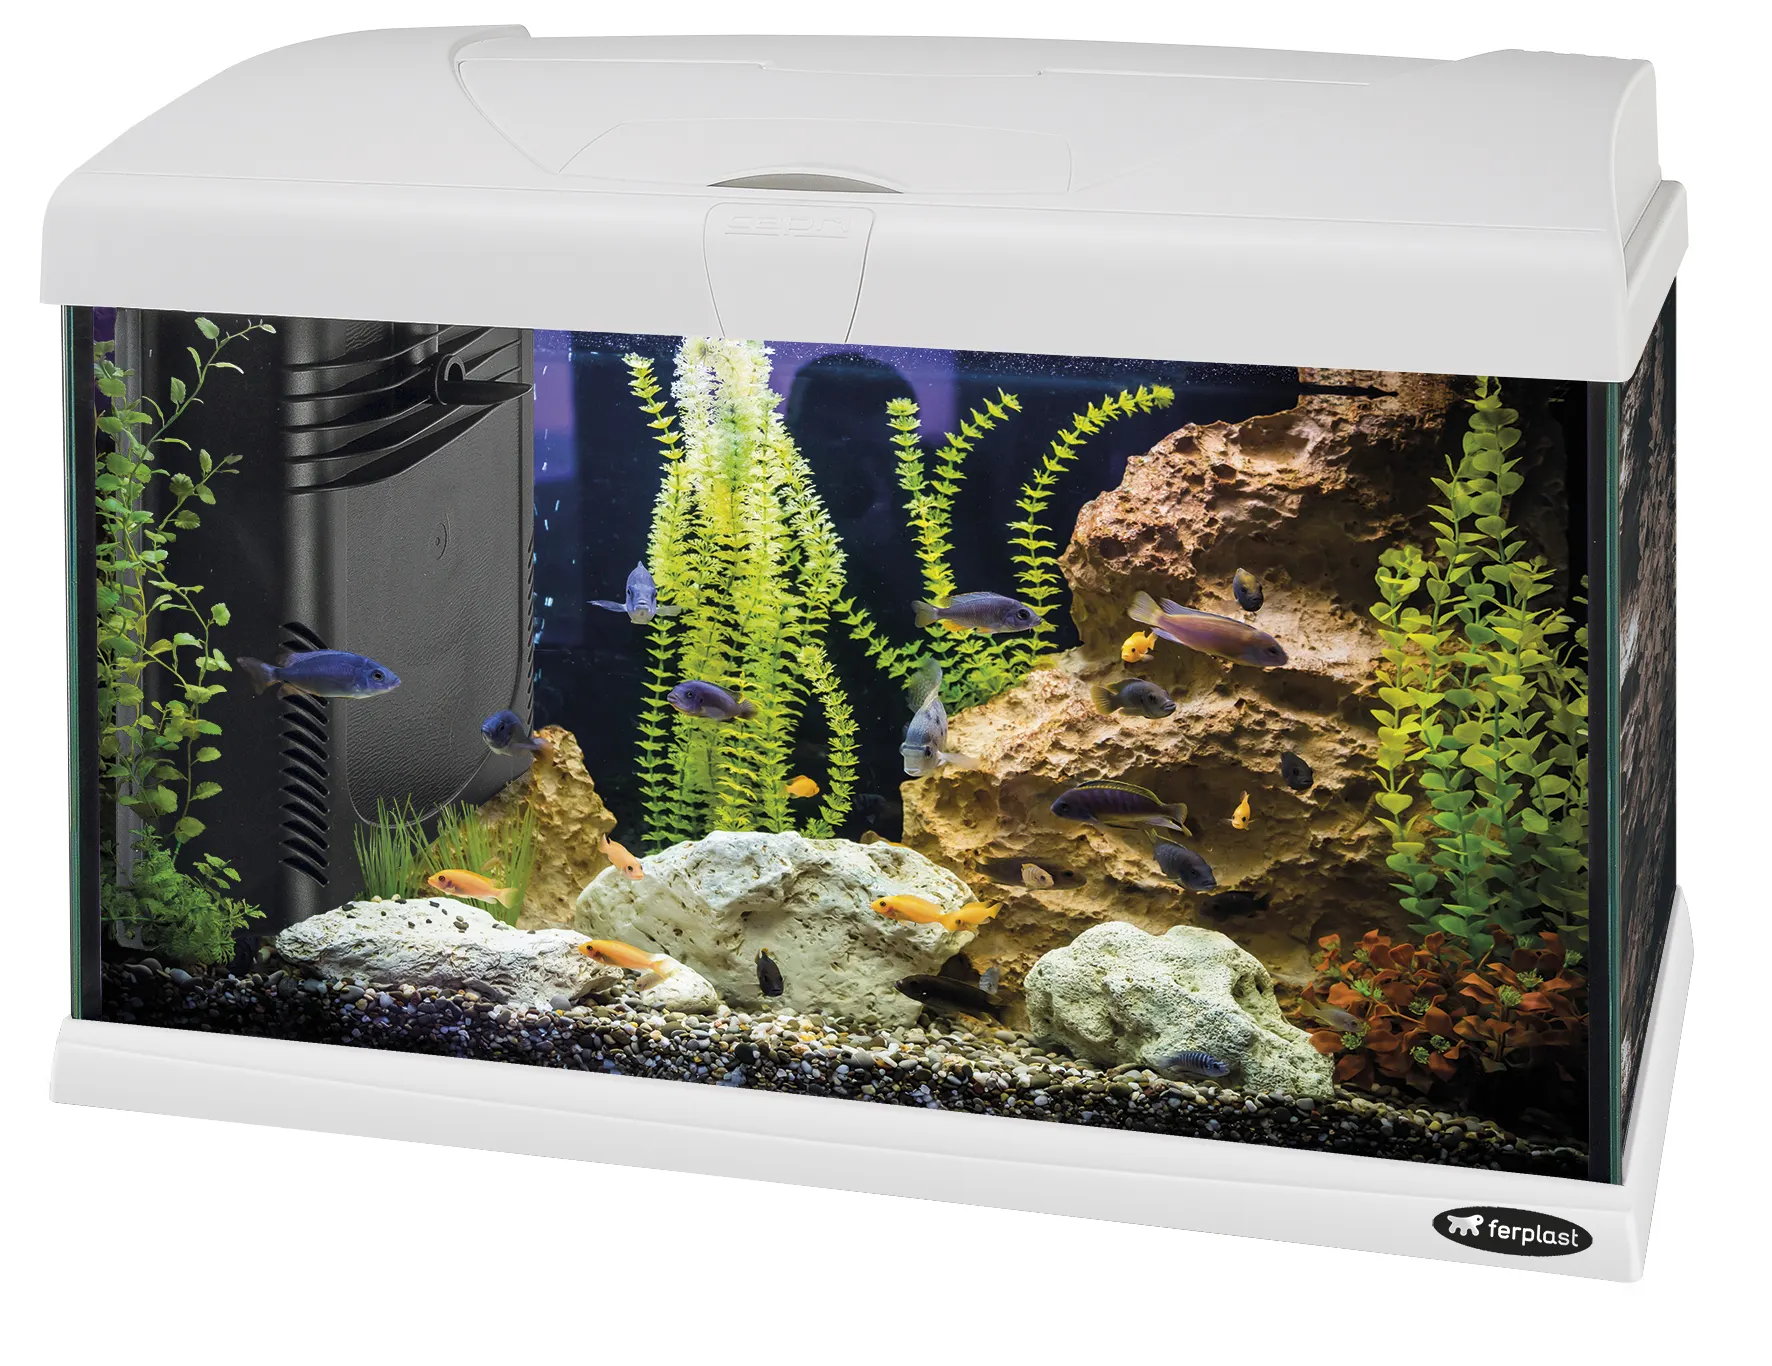 Fer plast Capri 50 LED - 40 L. Glas aquarium mit LED-Lampe, Innen filter und Heizung. 2 Farben.